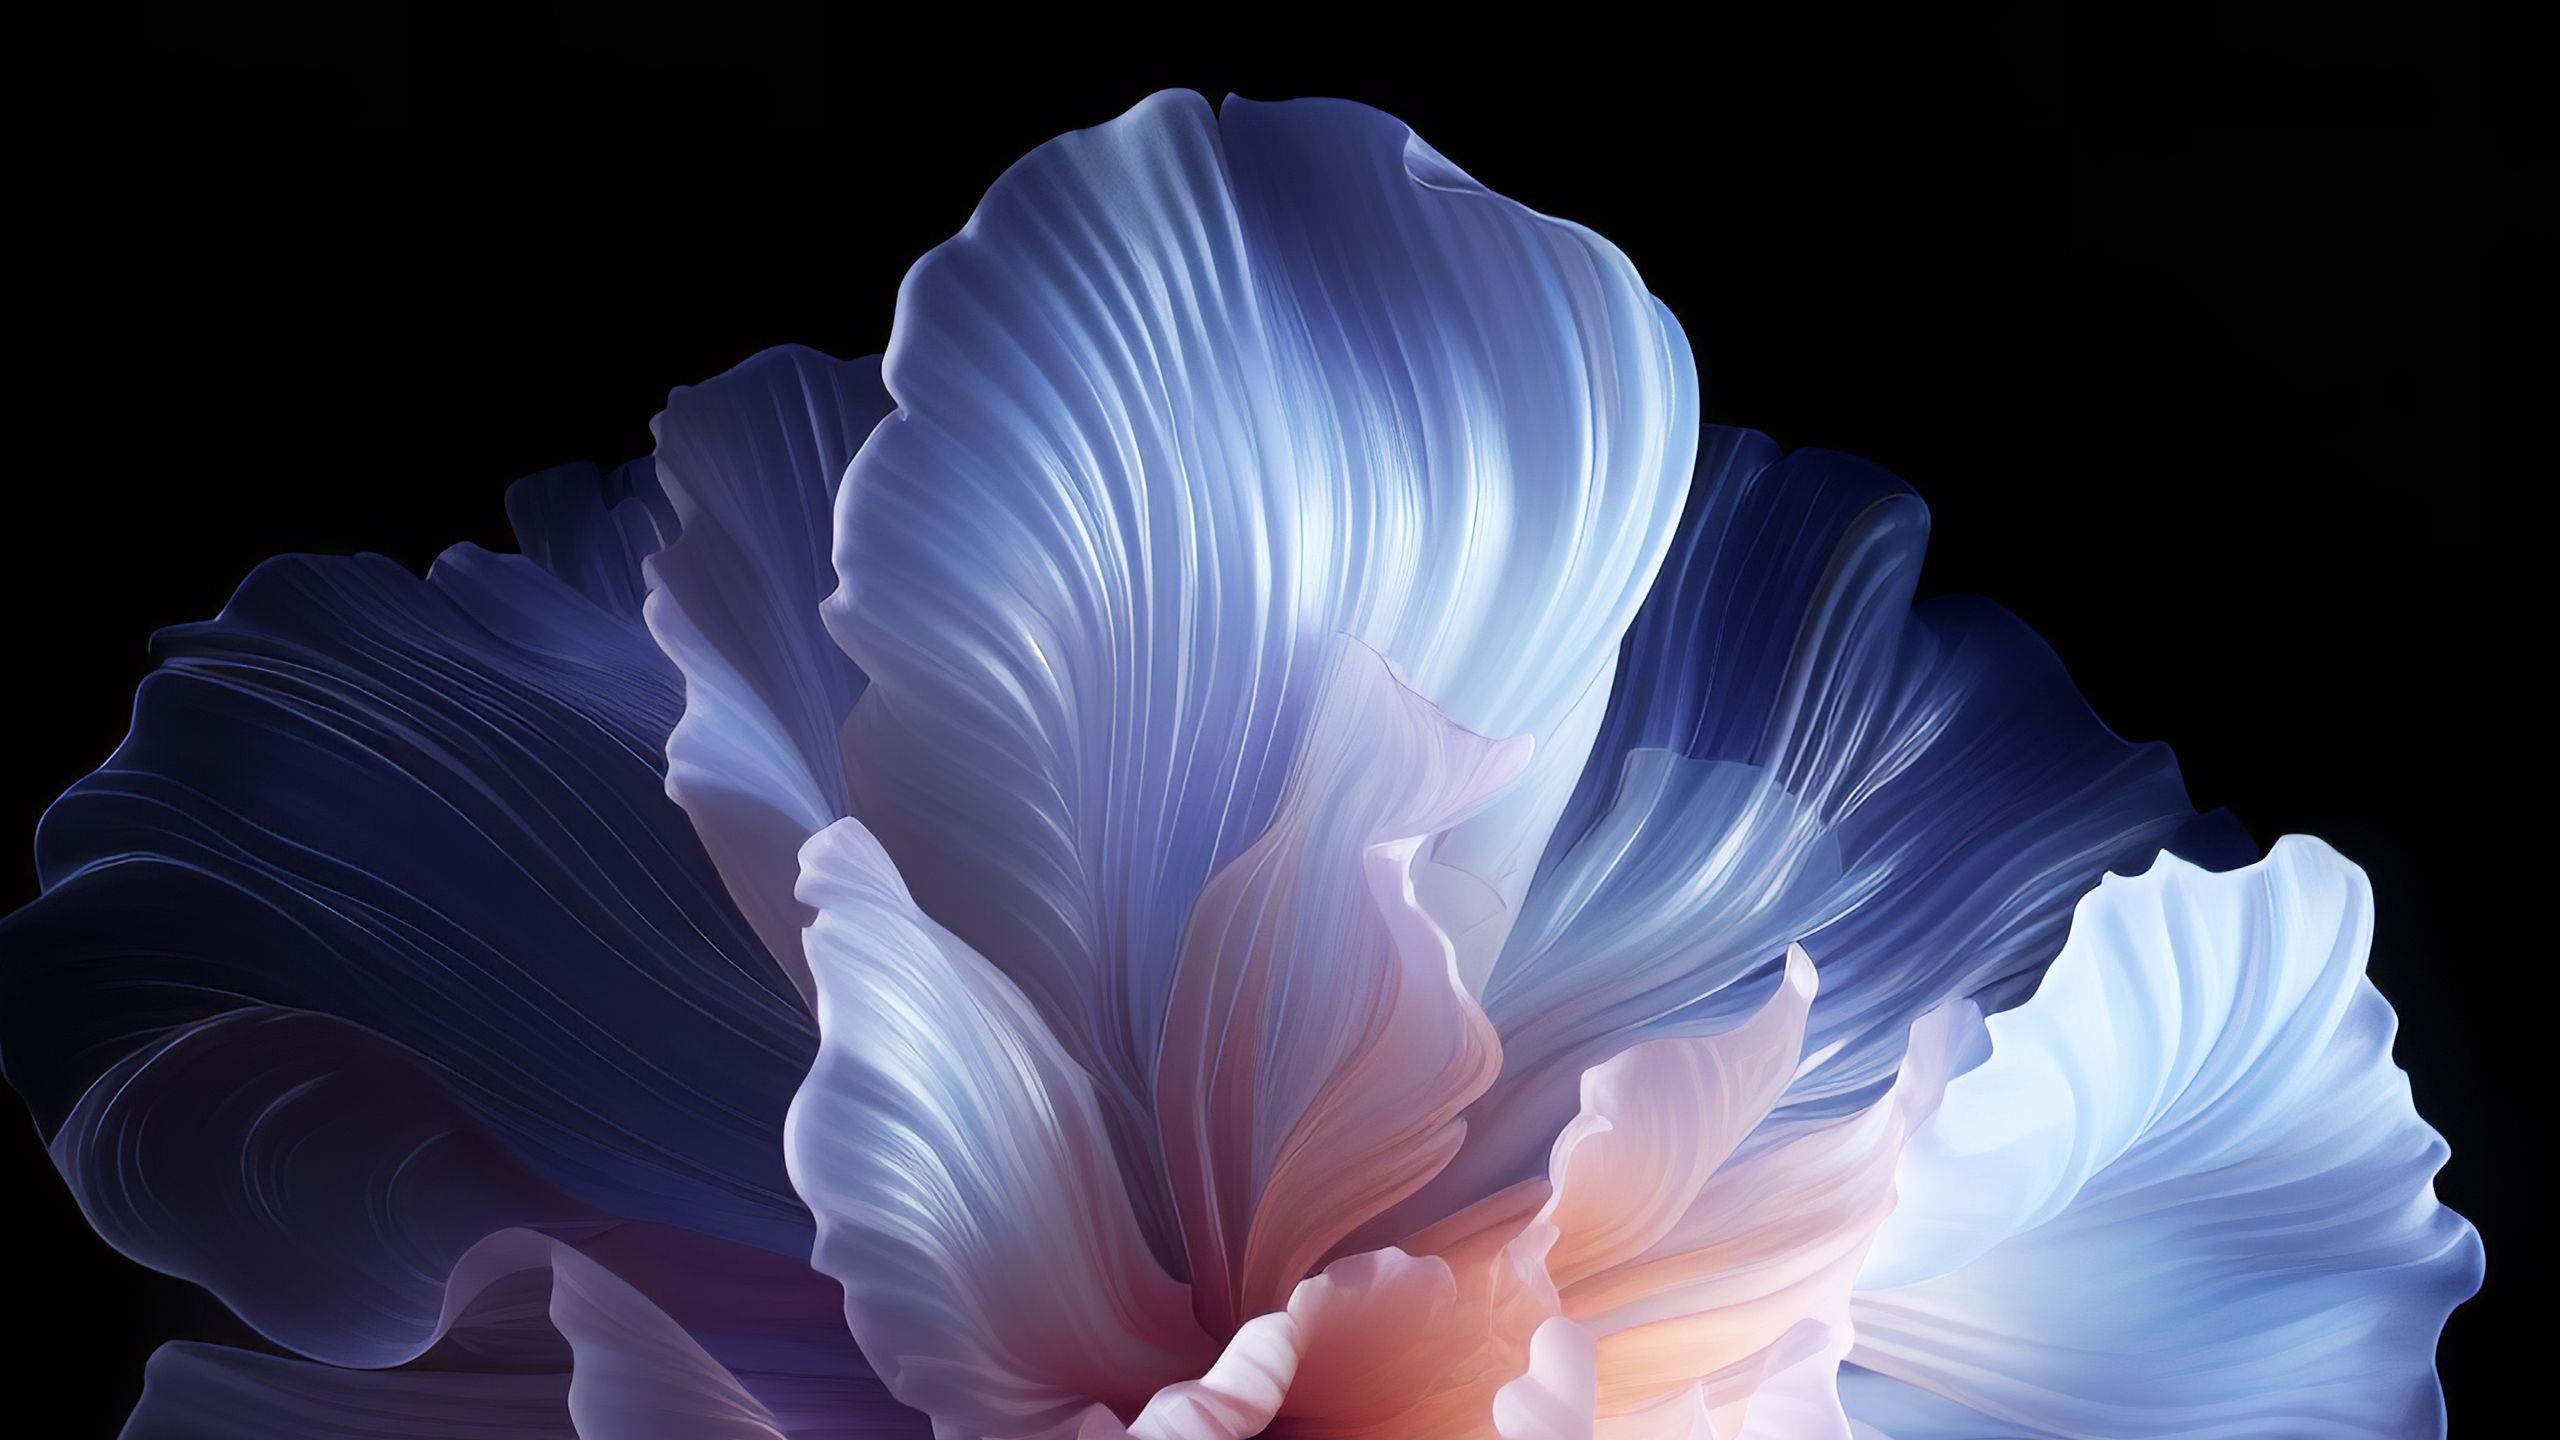 Download wallpaper 2560x1440 petal shape floral pattern, digital art ...